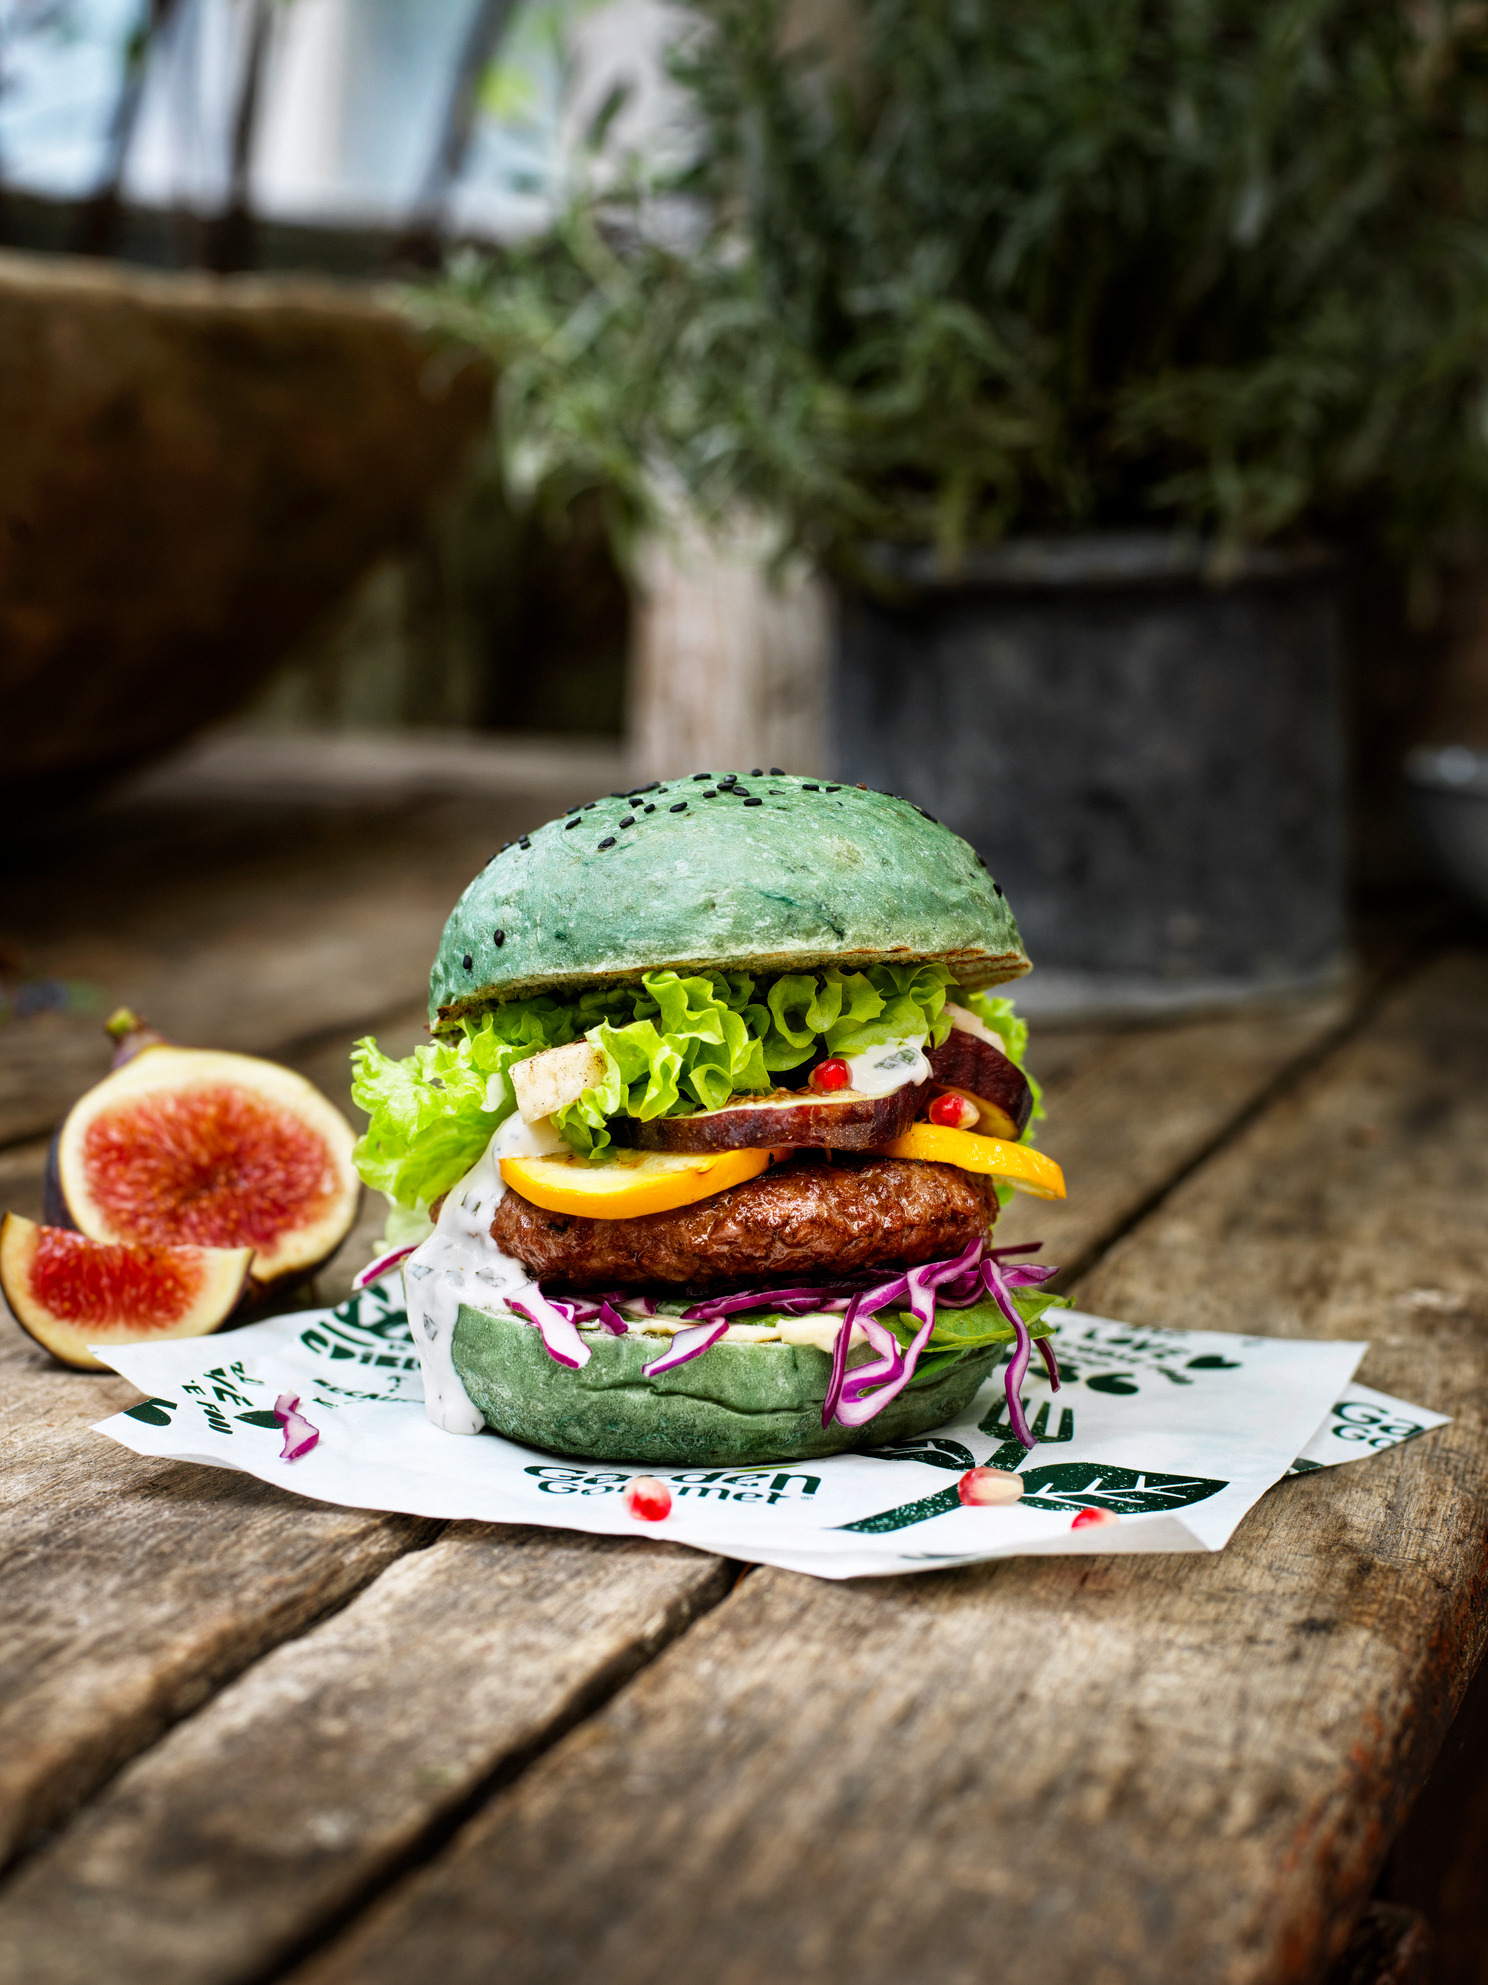 Deluxe-tarian" Burger Vegan Recipes | Veganuary